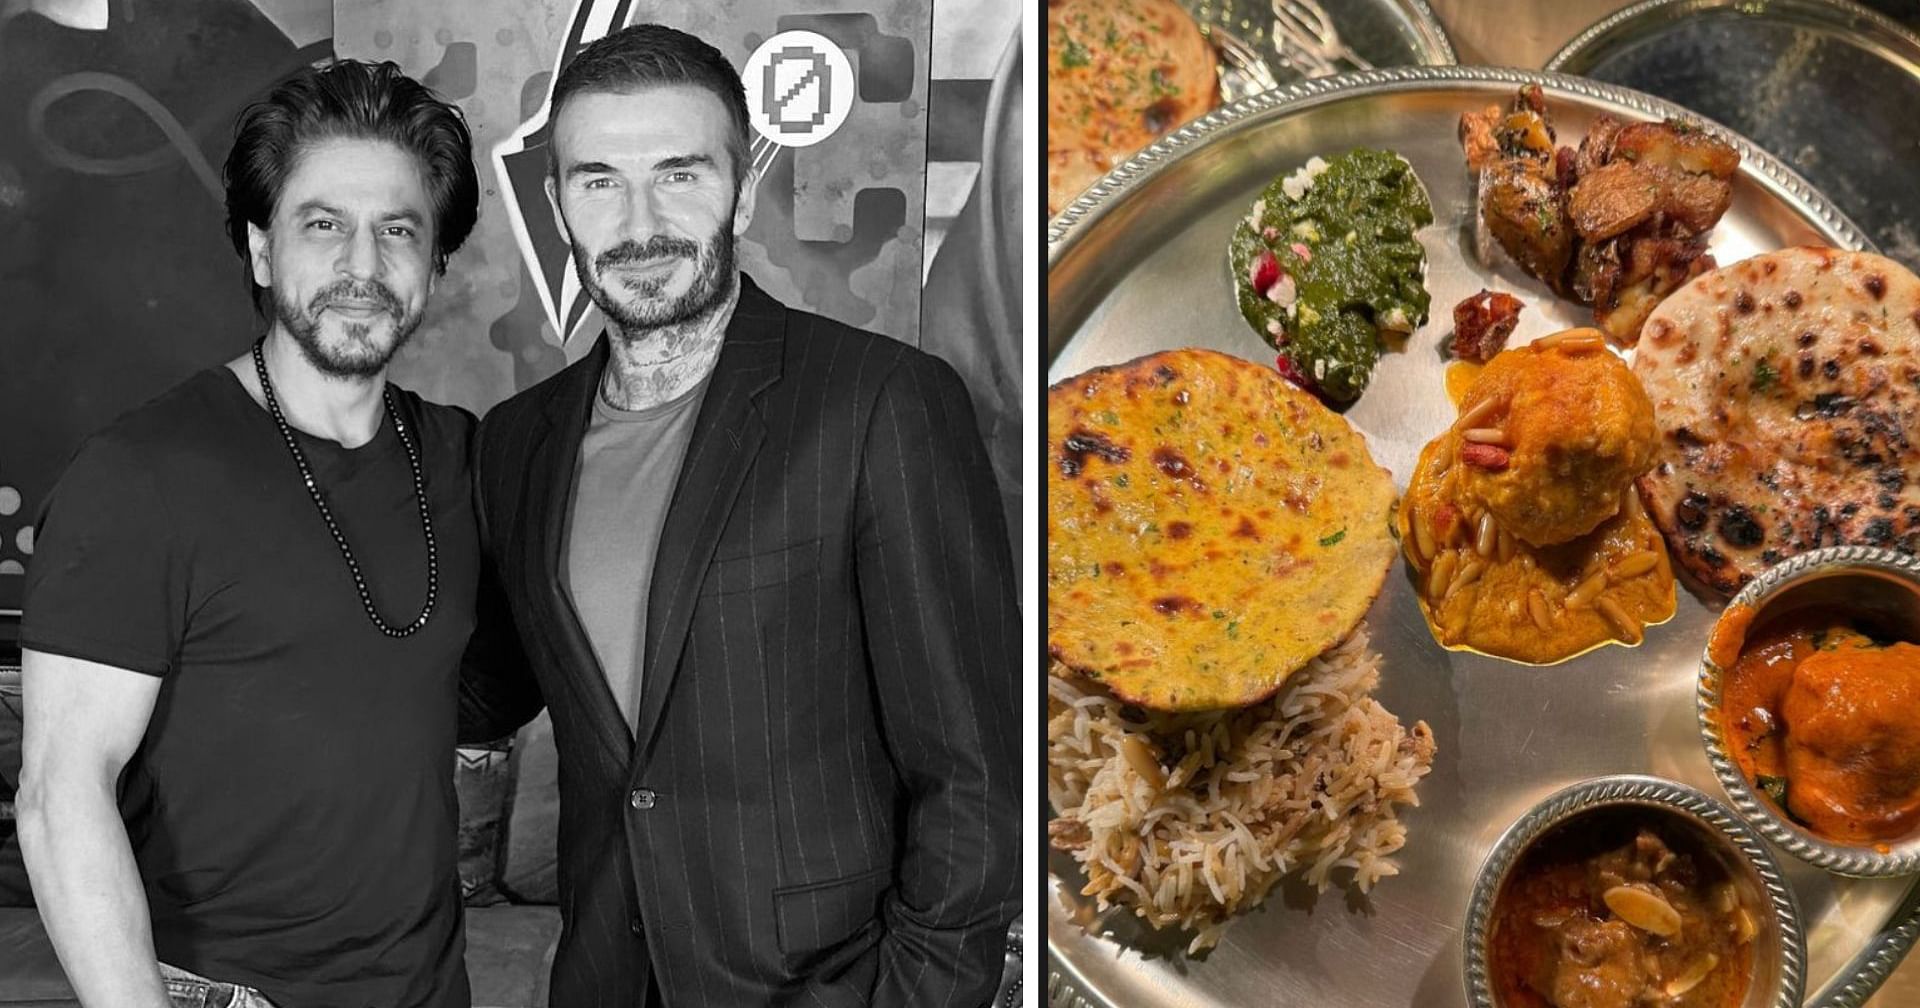 David Beckham Thanks Shah Rukh Khan, Sonam Kapoor For Hosting Him; Shares Pics of Desi Food He Tried